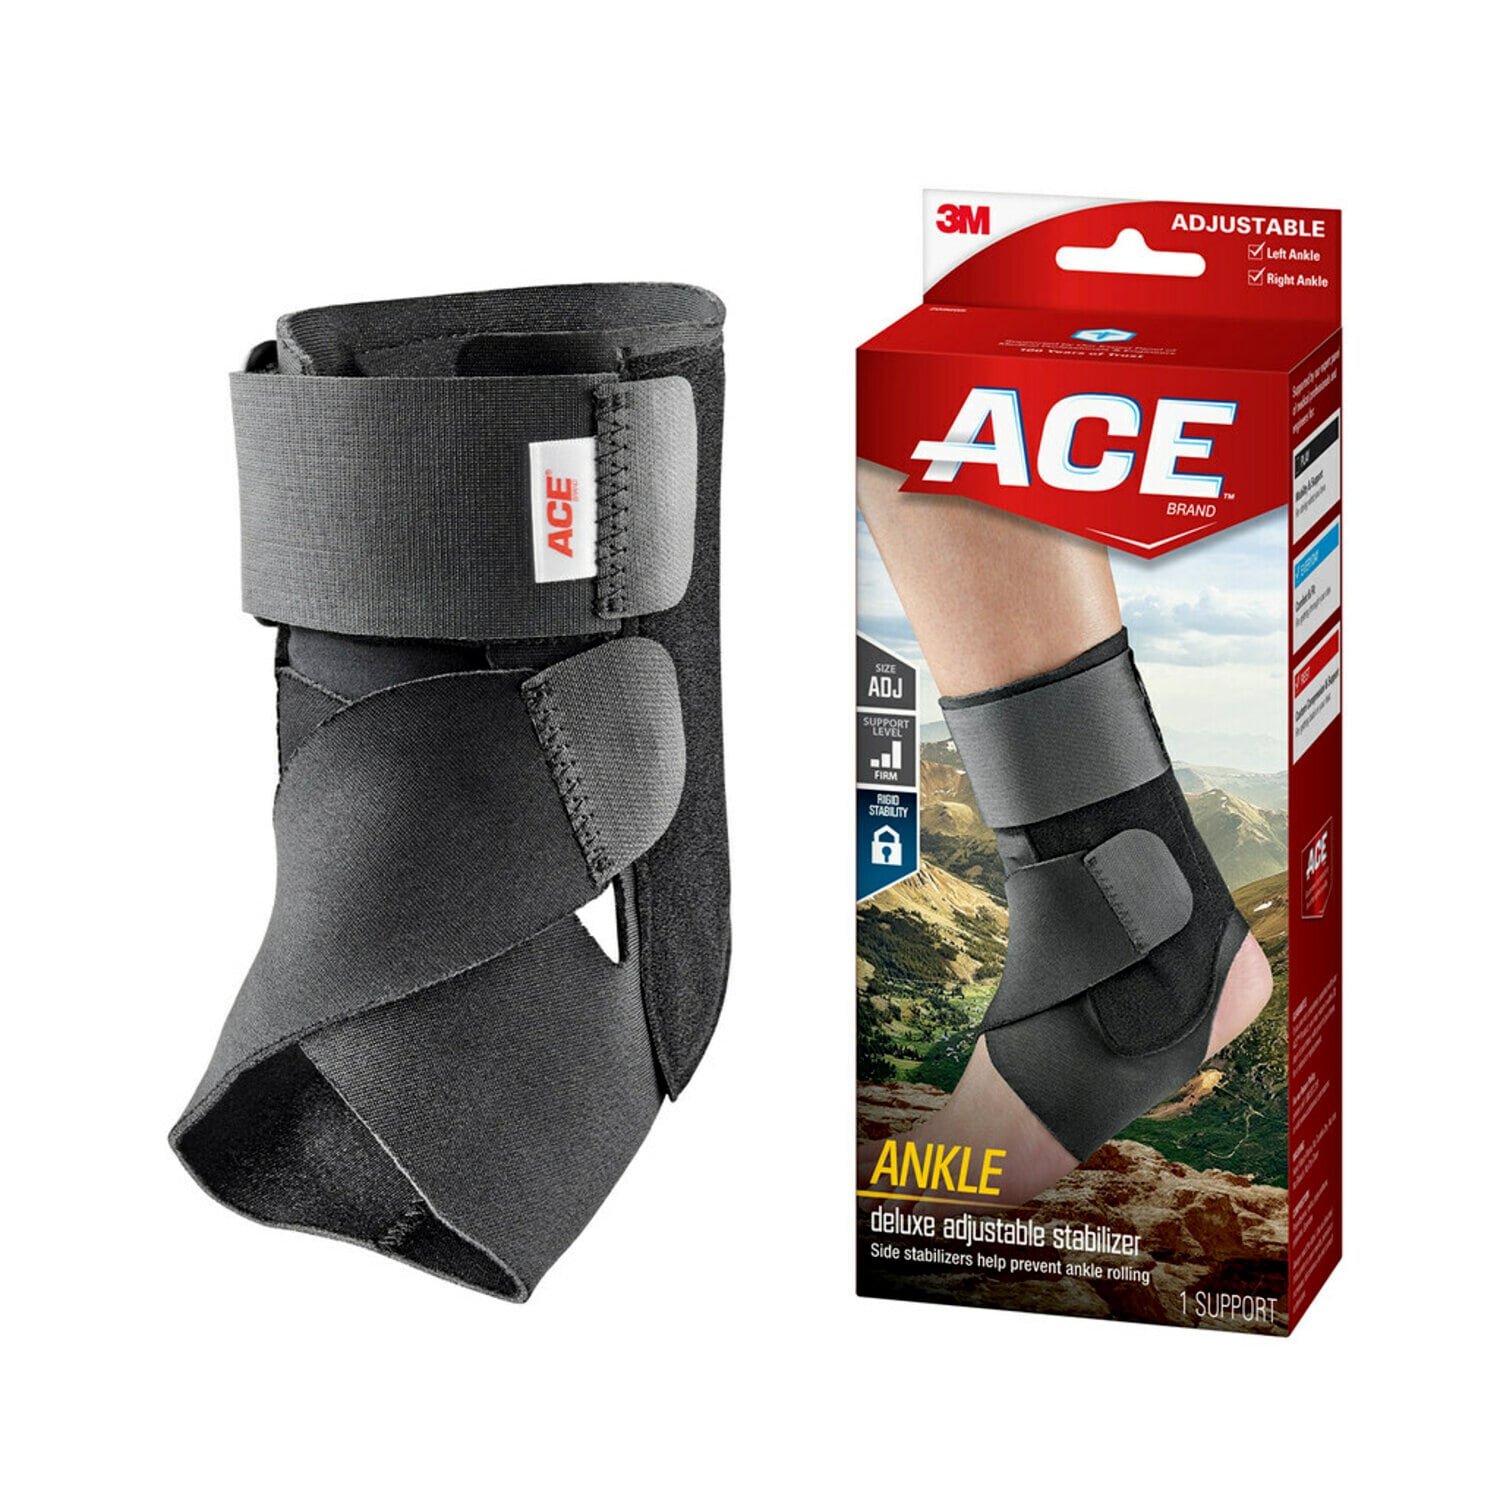 7100098855 - ACE Ankle Brace w/Stabilizer 209605, Adjustable